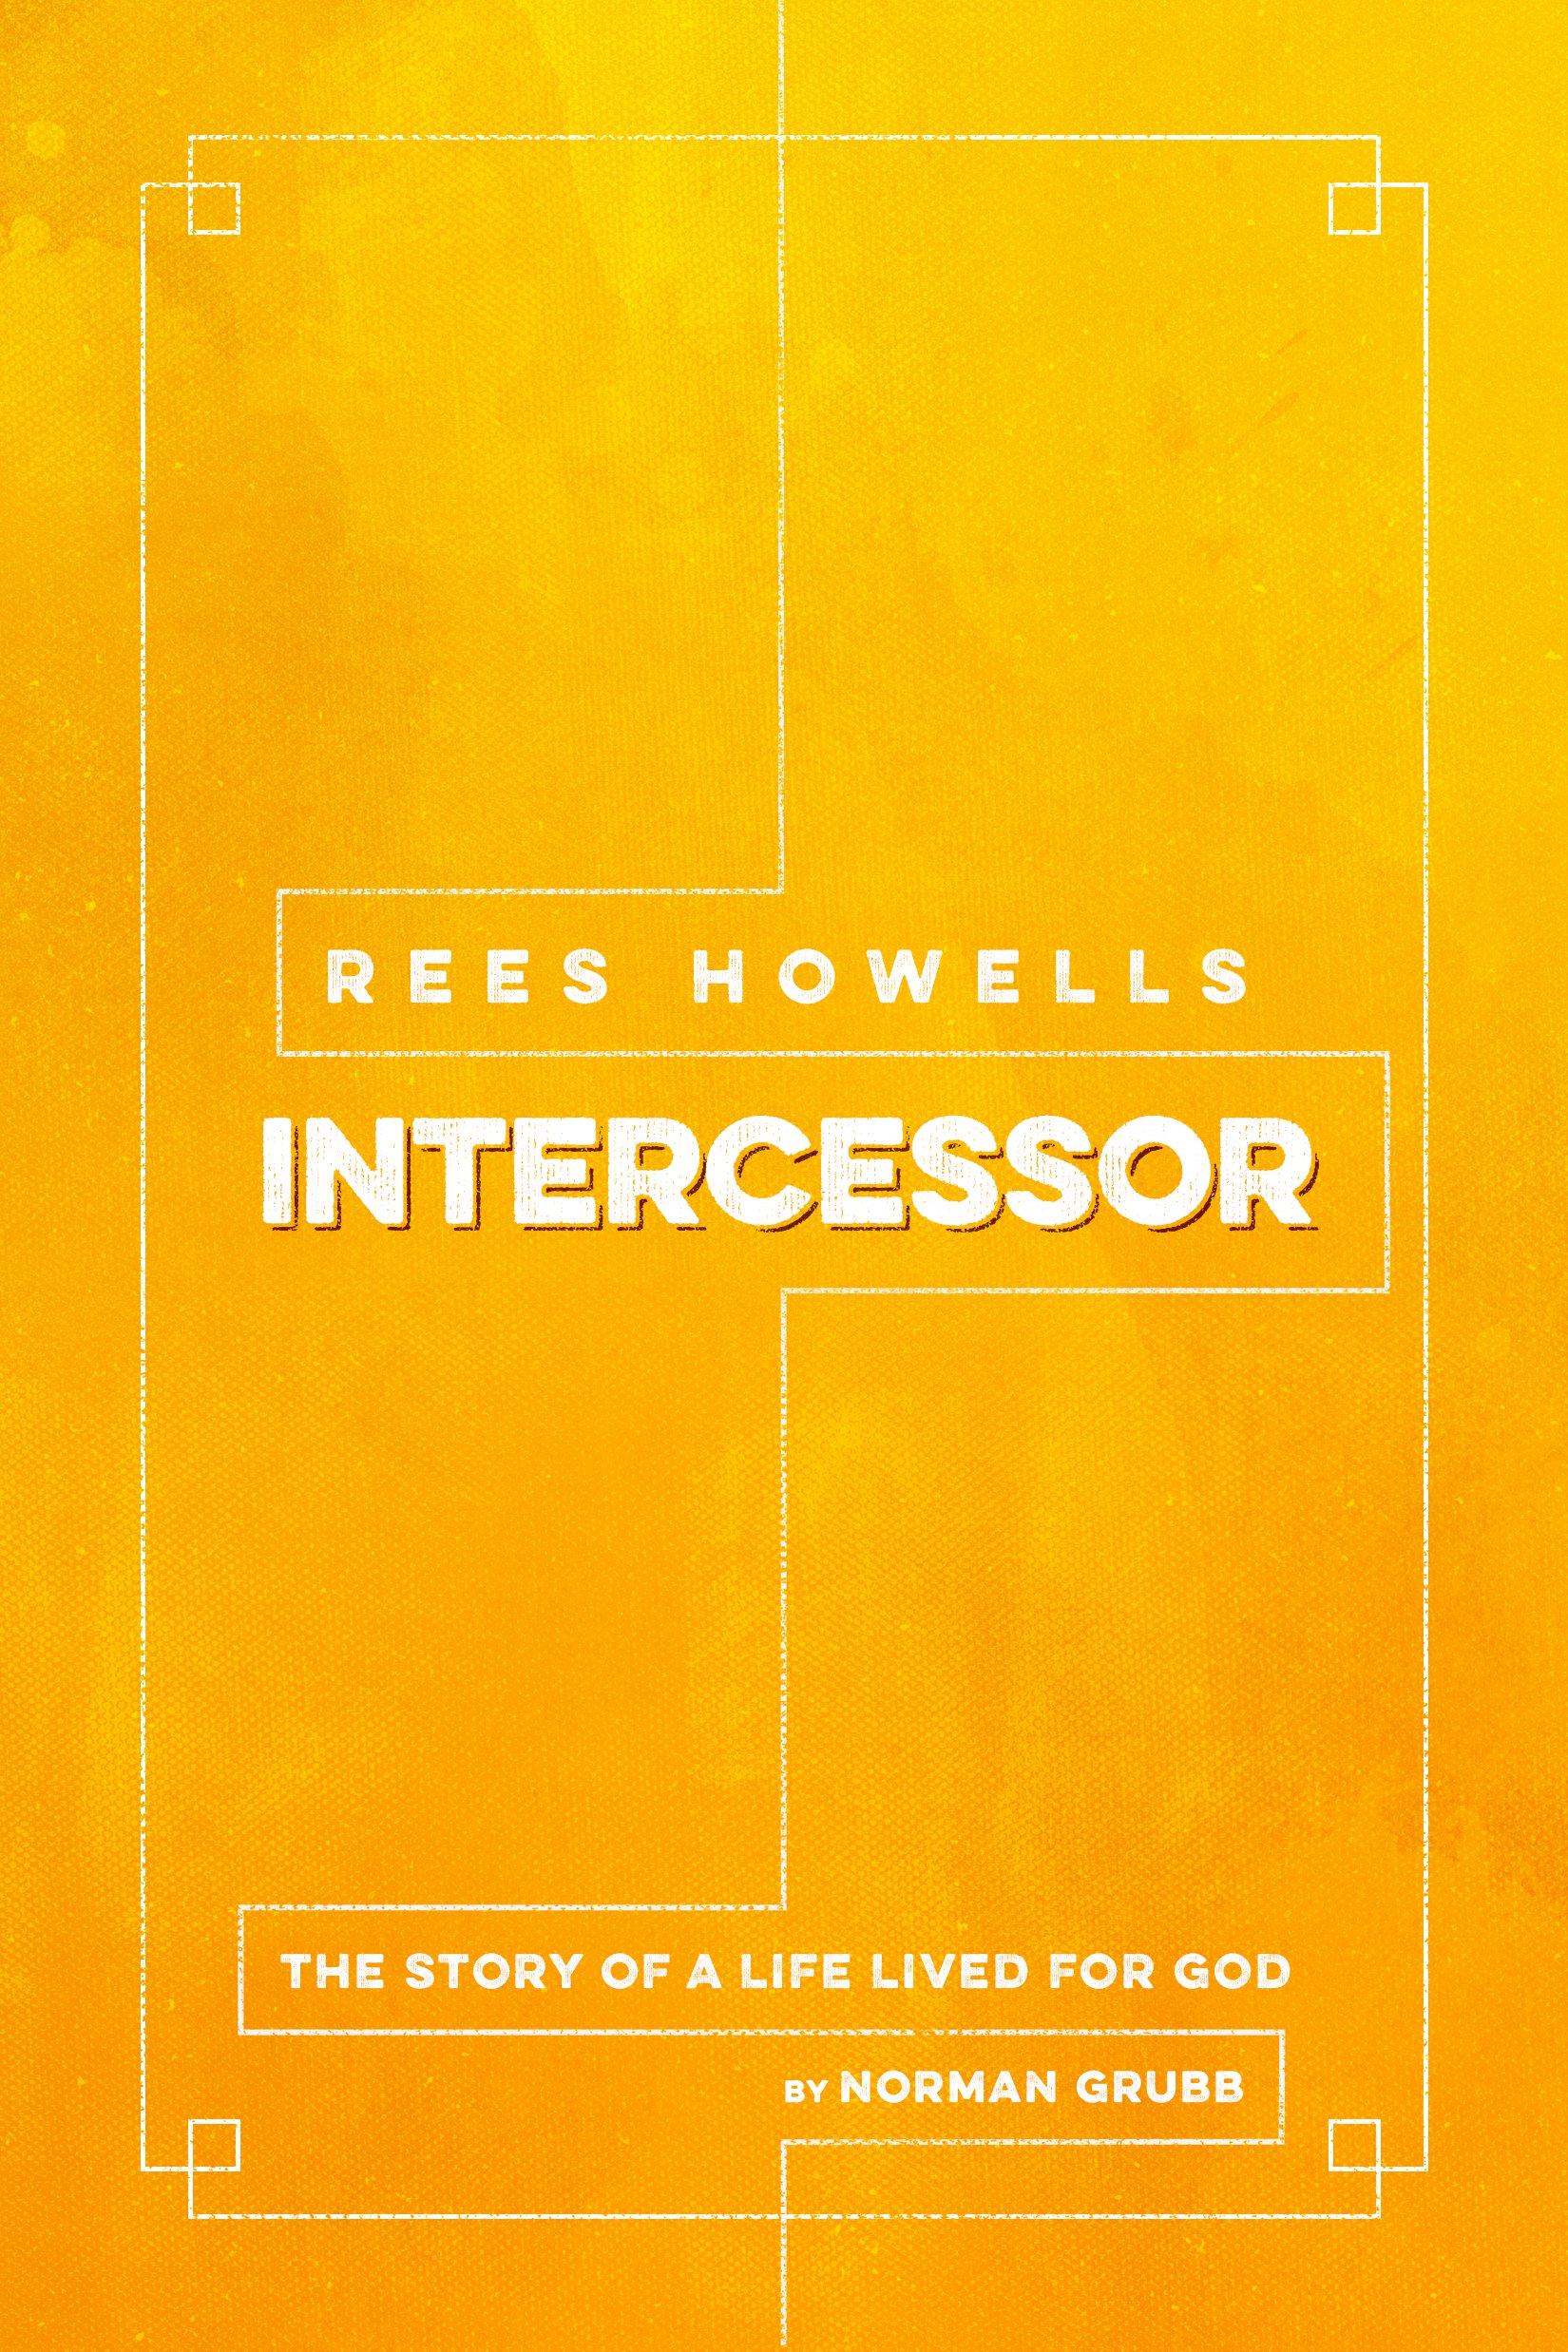 REES HOWELLS INTERCESSOR